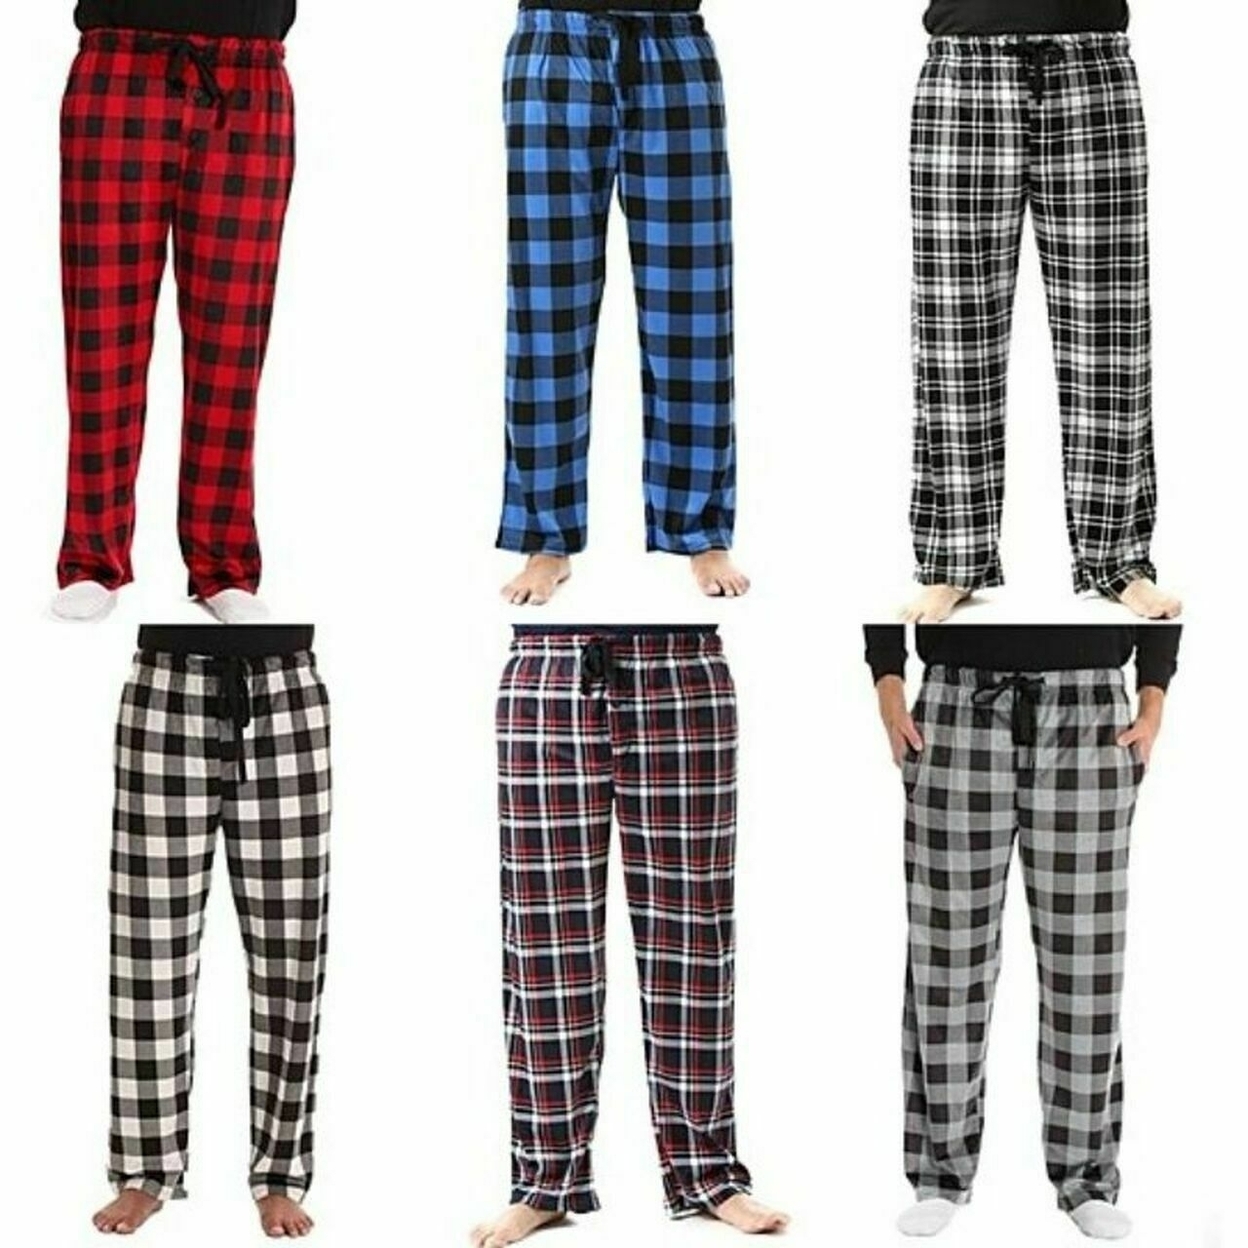 2-Pack: Men's Ultra Soft Cozy Flannel Fleece Plaid Pajama Sleep Bottom Lounge Pants - Red & Red, Medium